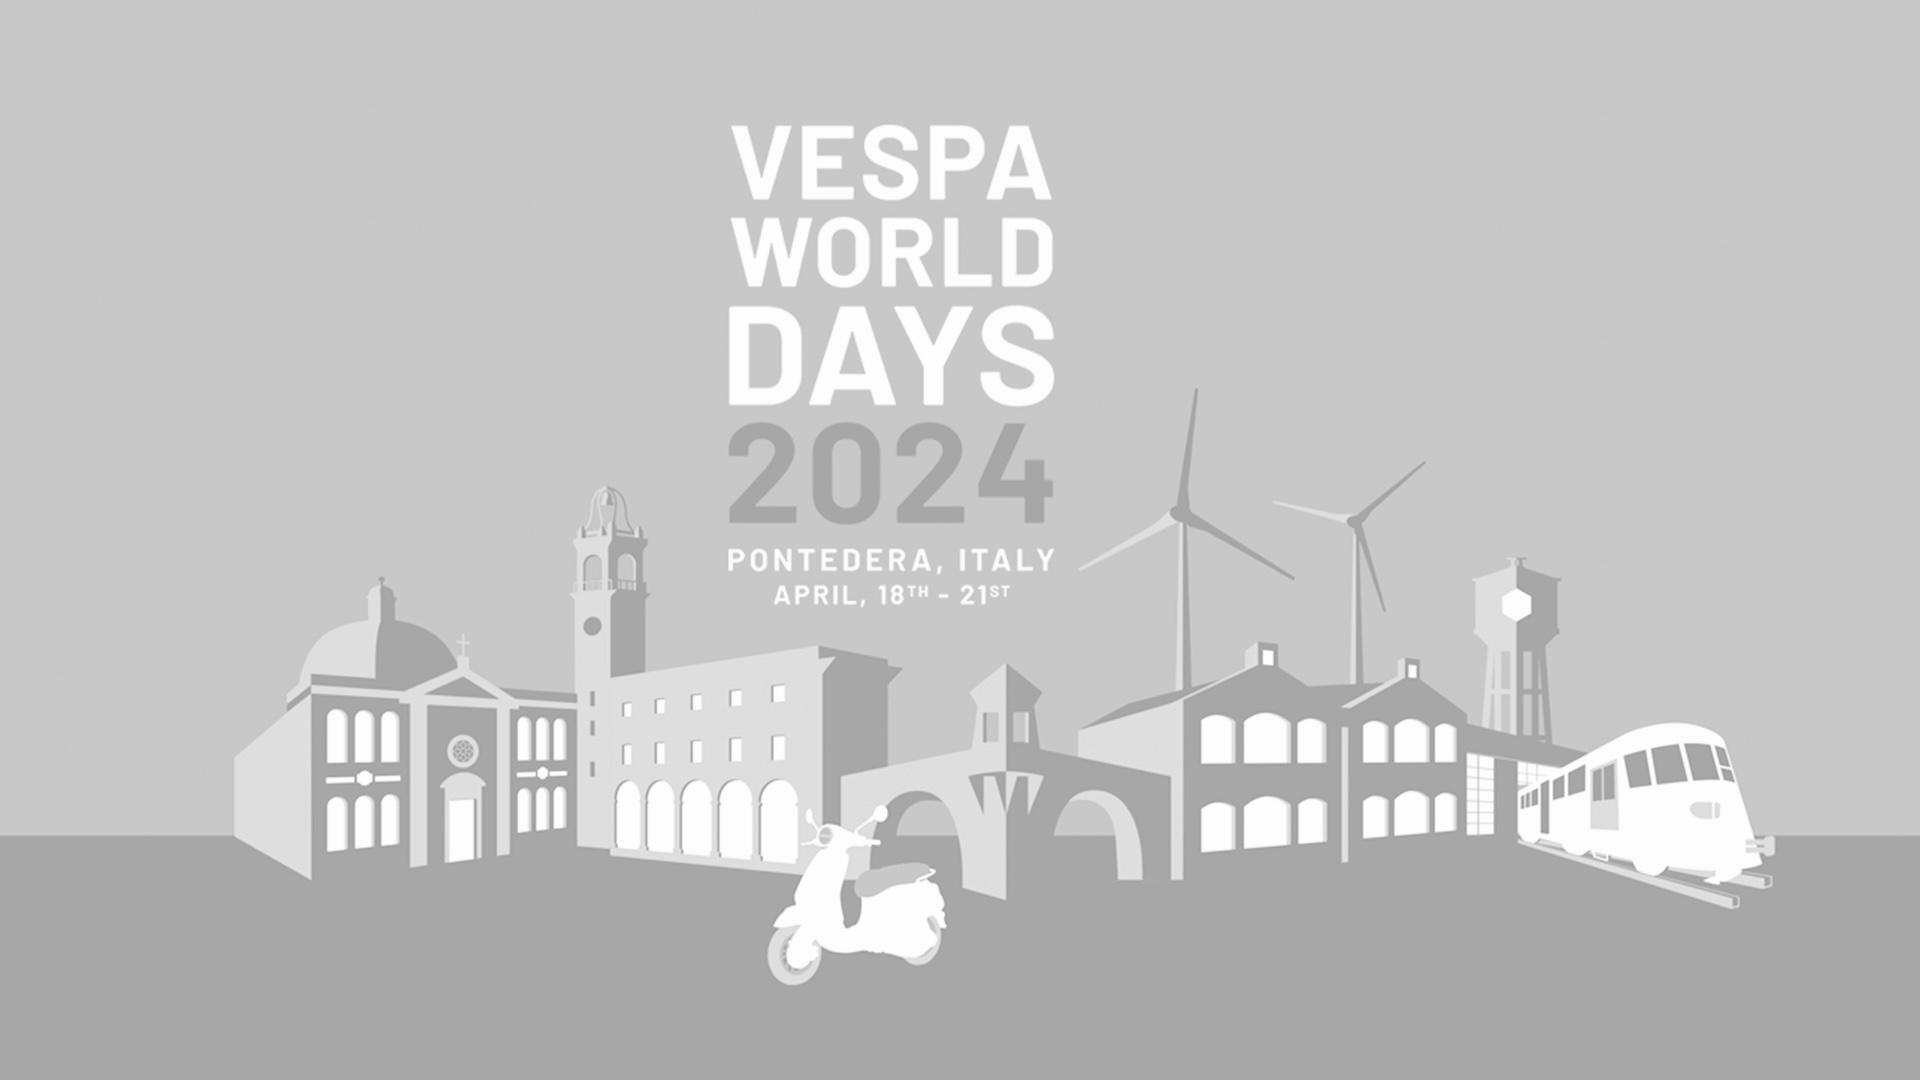 VESPA WORLD DAYS 2024